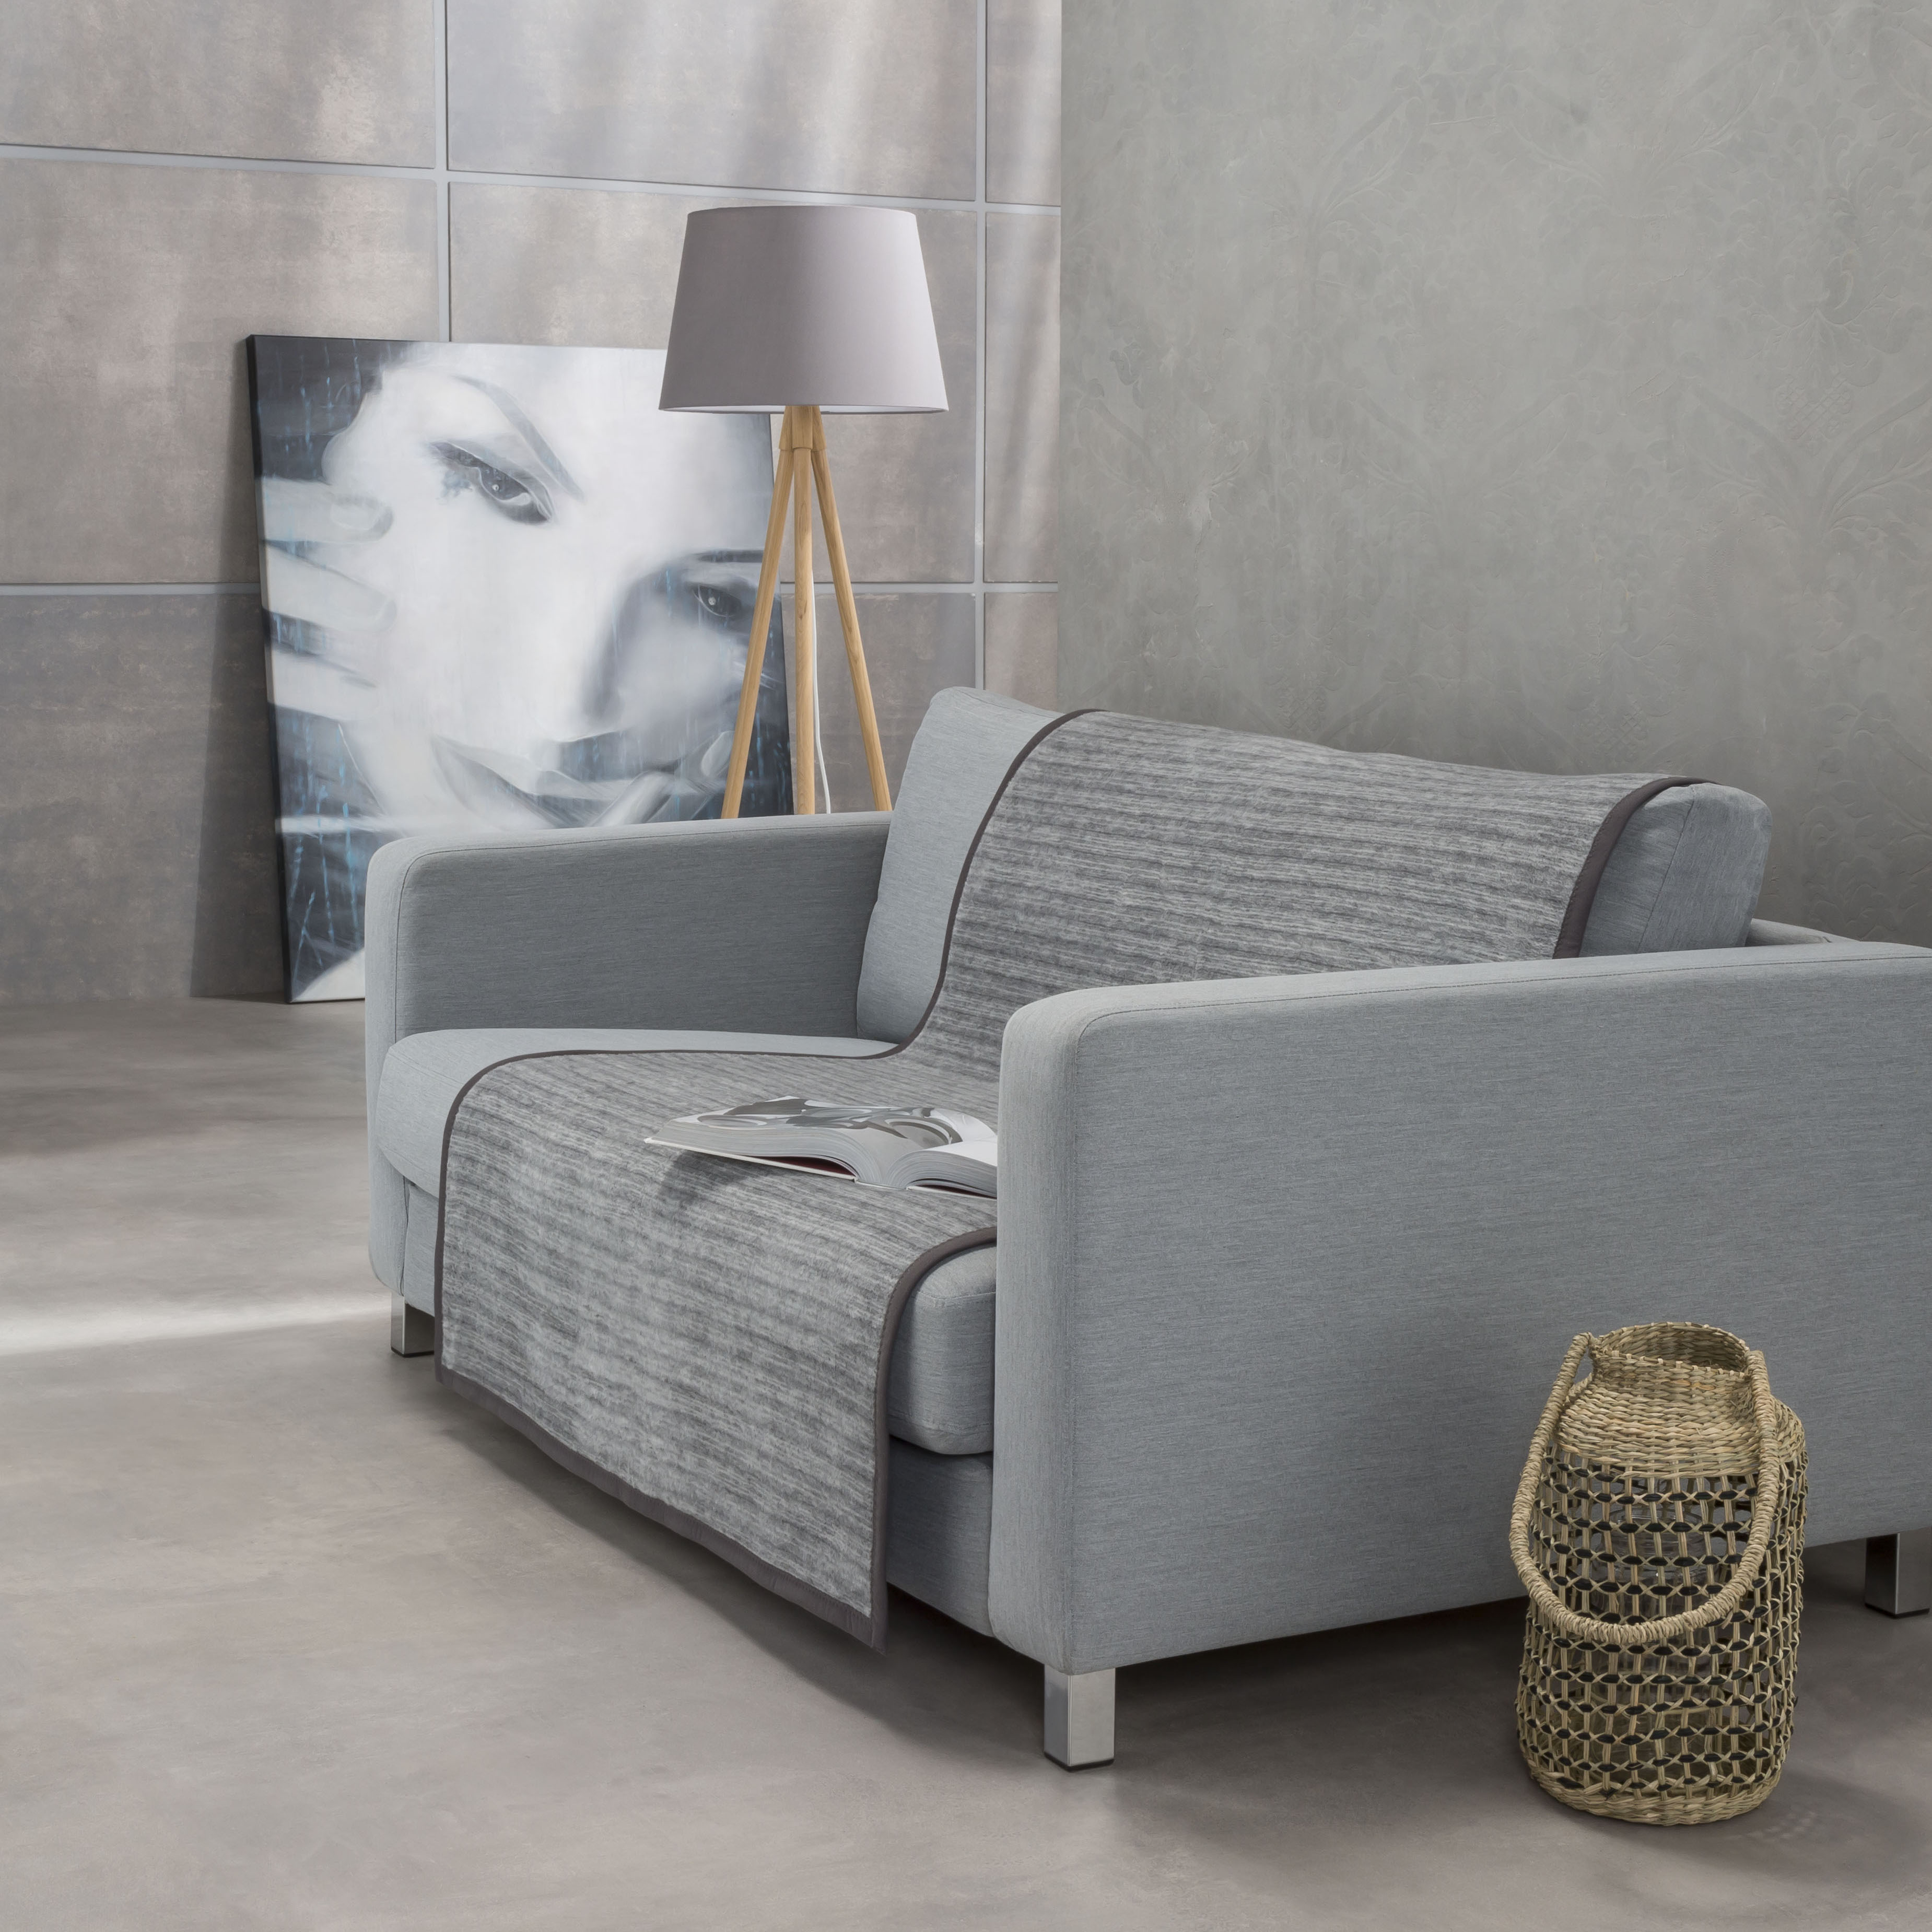 Kopie von Ibena - Uni Decke - Fano - 6 vers. Farben | Couchdecken.de - The  Sofa Blanket Shop